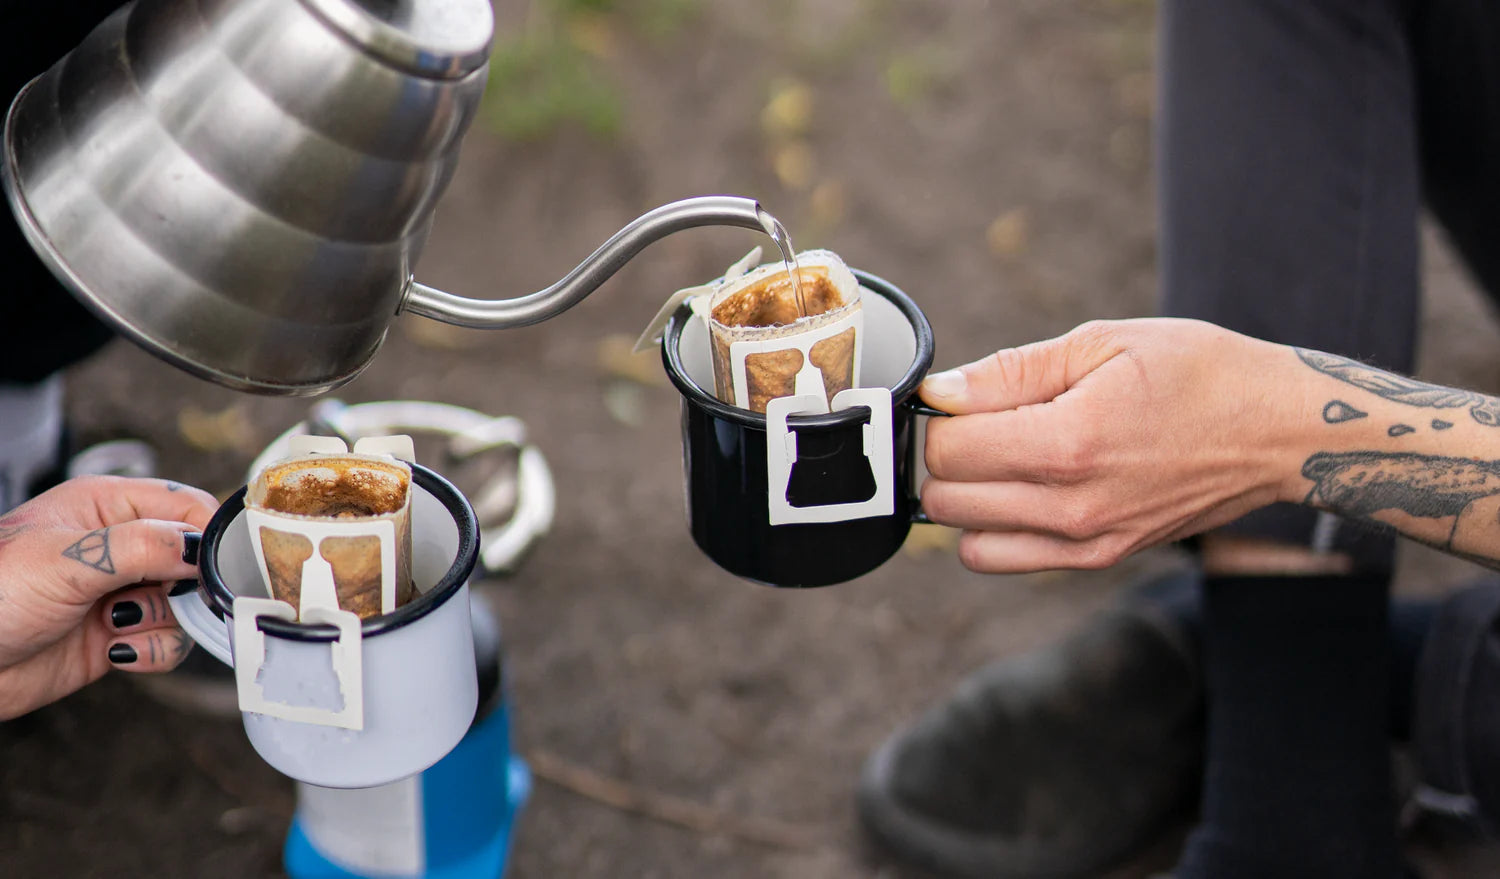 CAMPING SEASON - Bester Kaffee in deinem Survival Kit